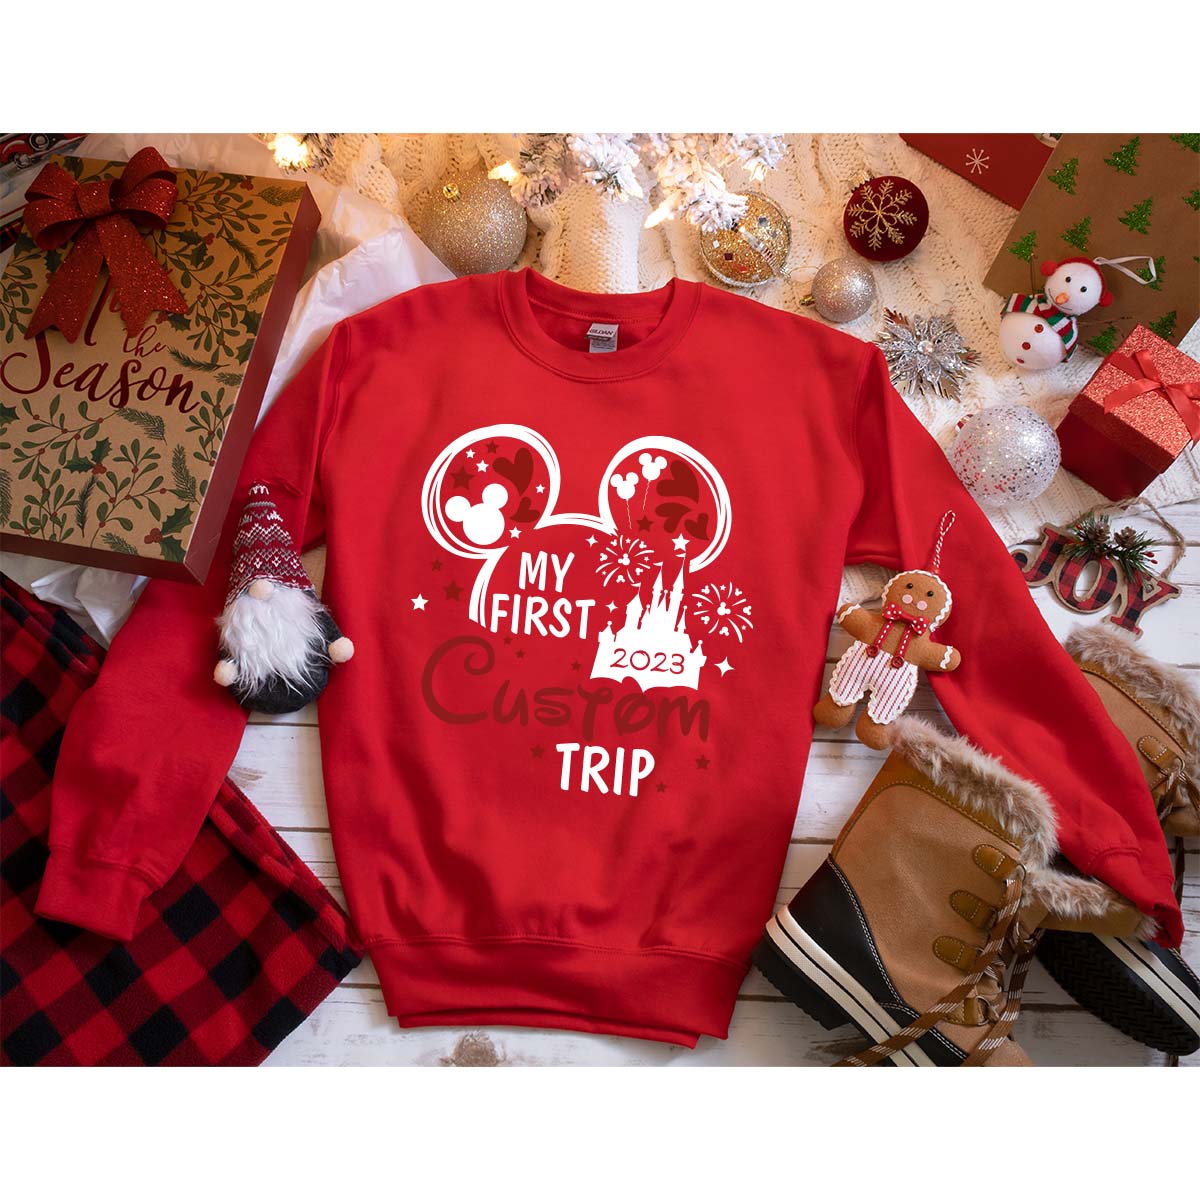 Custom Disney 2023 Shirts, Disney Trip Matching Family Tees, Customizable Disney Sweatshirt, Disney Vacation Gifts for Kids, Kids Mickey Tee